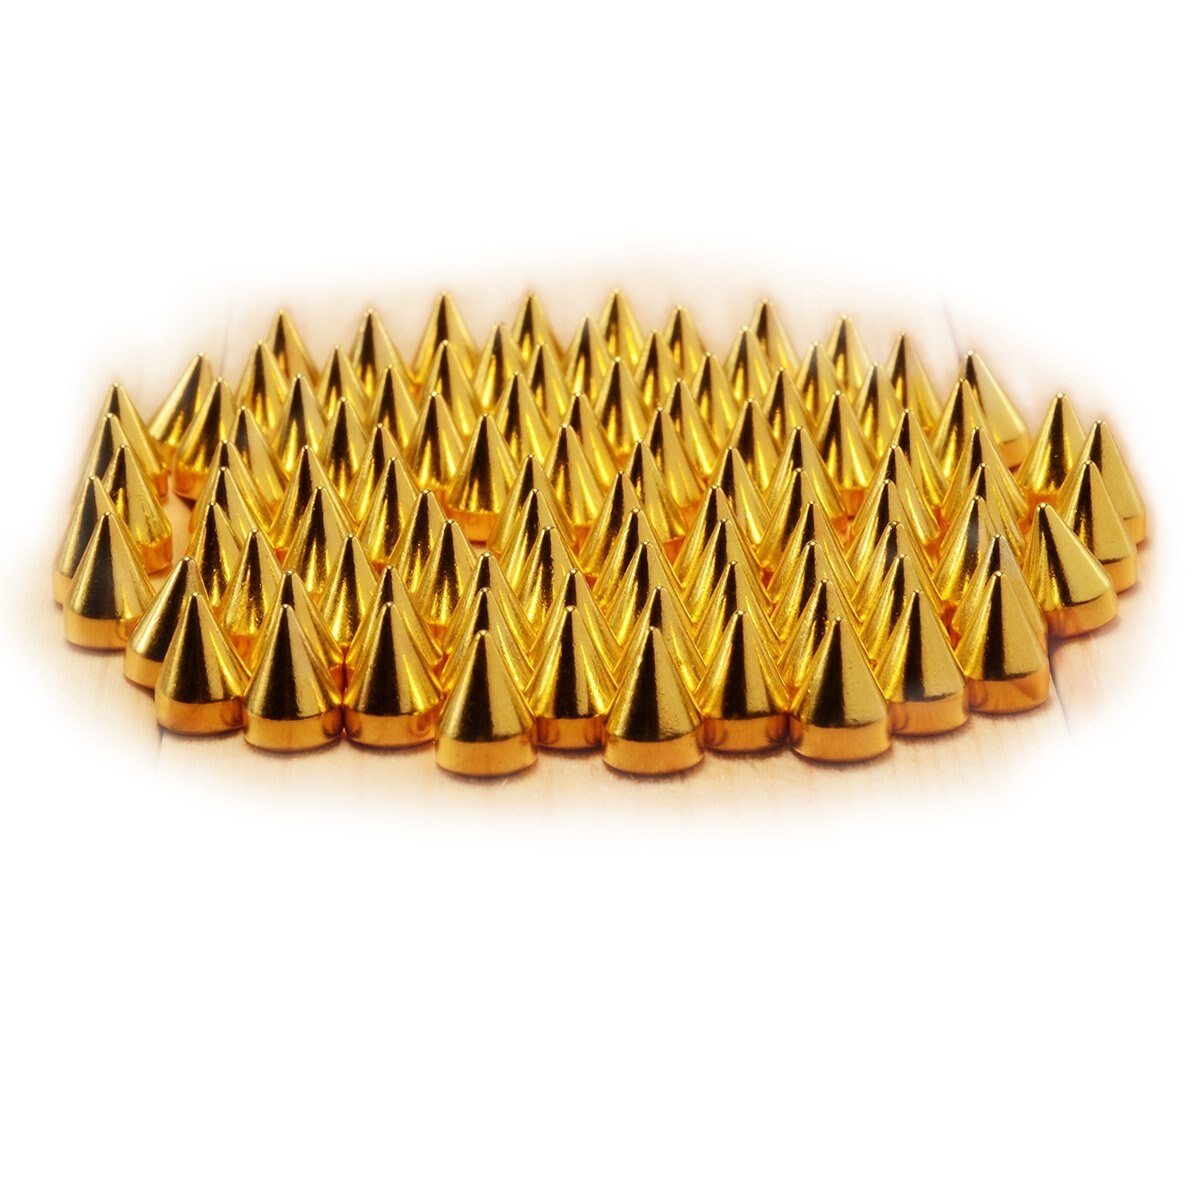 Praktische Szd 9.5Mm 100Pcs Screwback Gold Cone Spikes Studs Leathercraft Diy Punk Spots Bullet